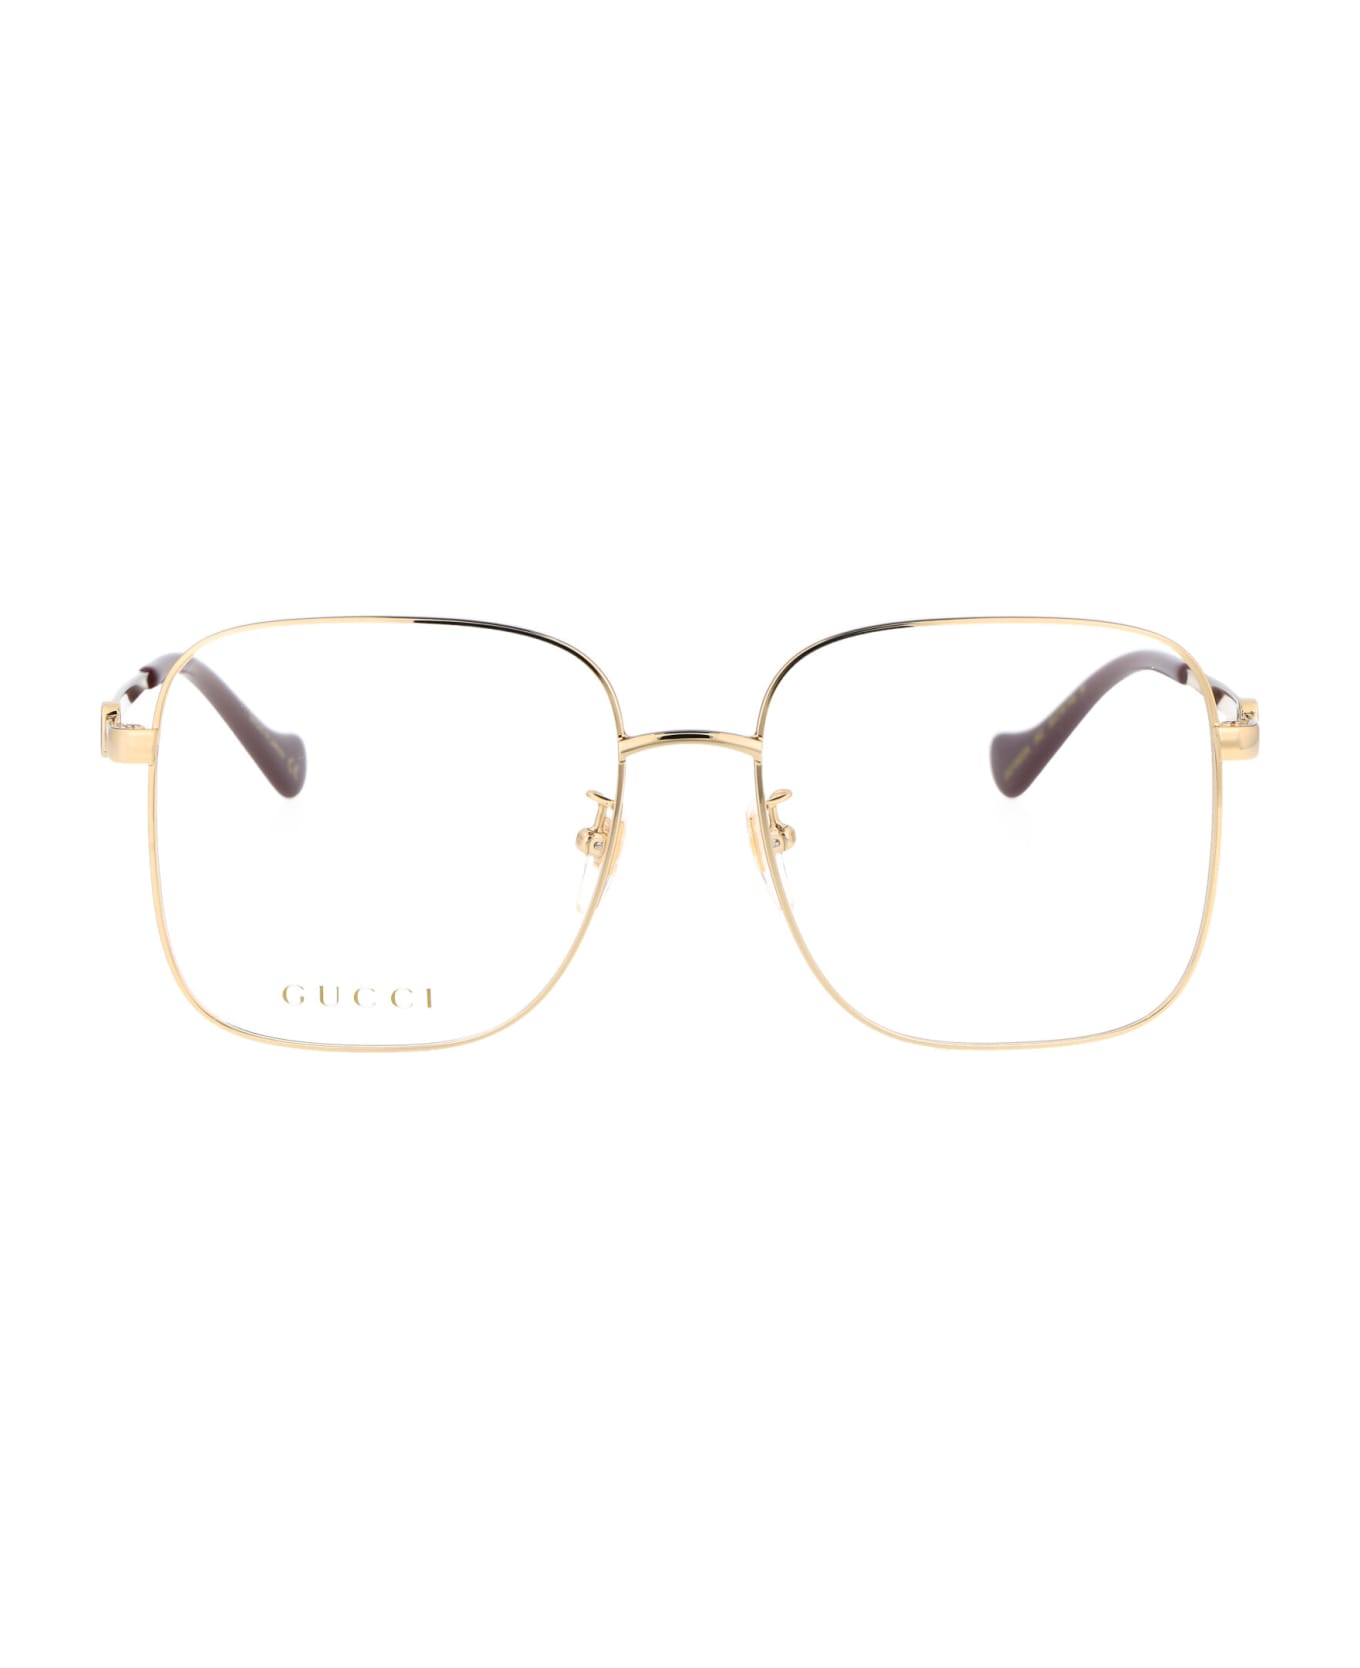 Gucci Eyewear Gg1092oa Glasses - 002 GOLD GOLD TRANSPARENT アイウェア